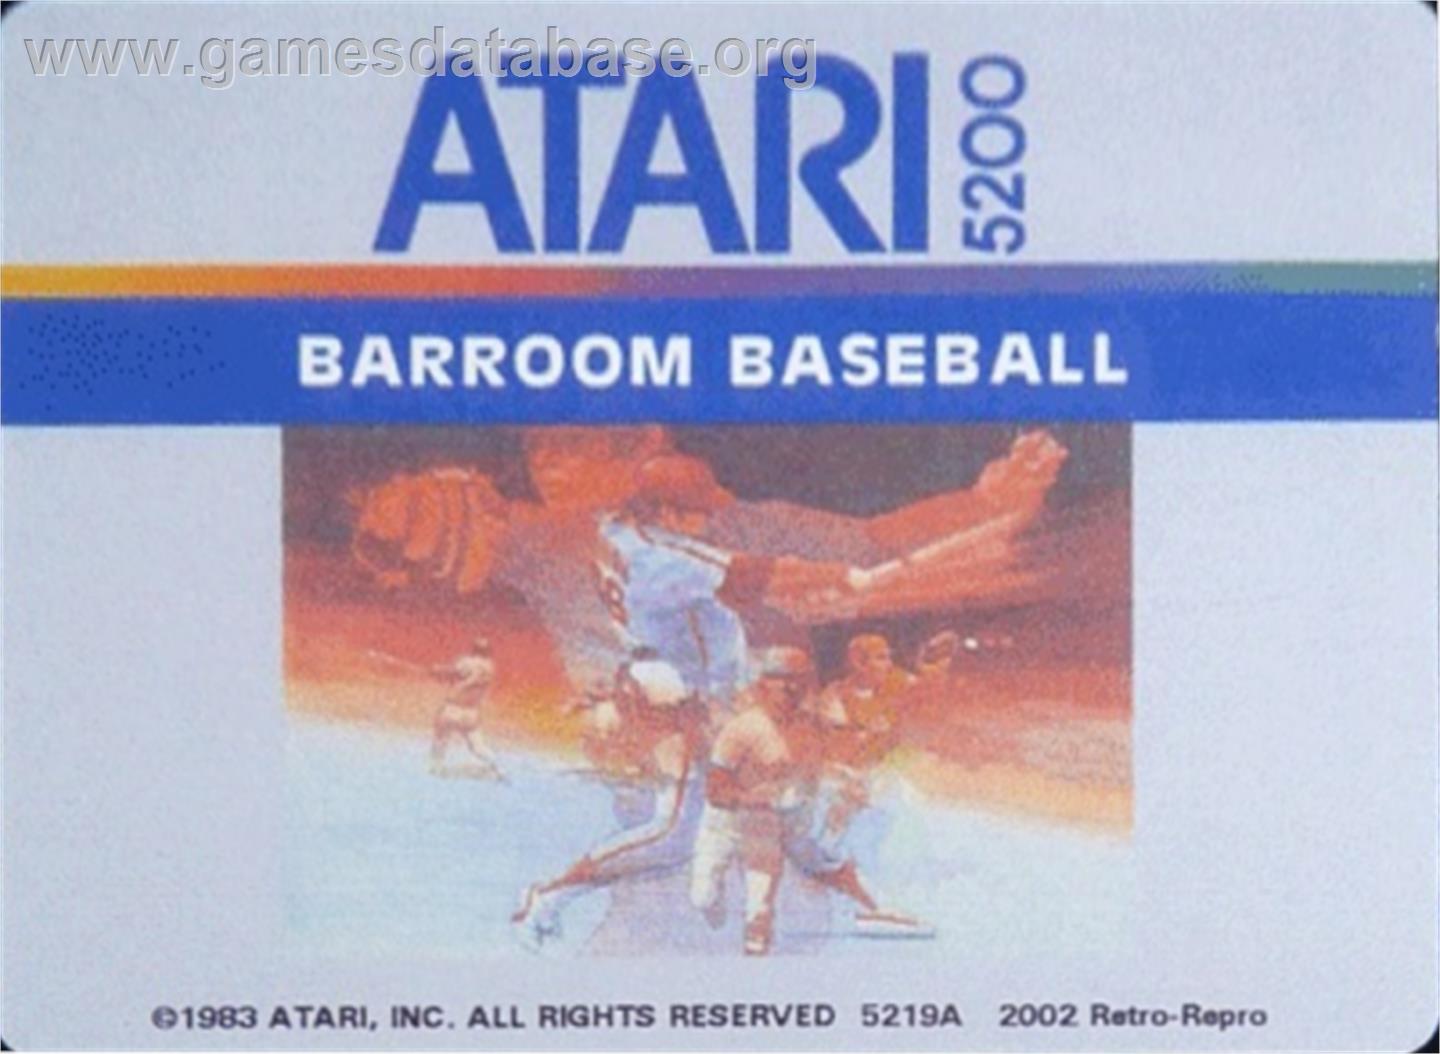 Barroom Baseball - Atari 5200 - Artwork - Cartridge Top